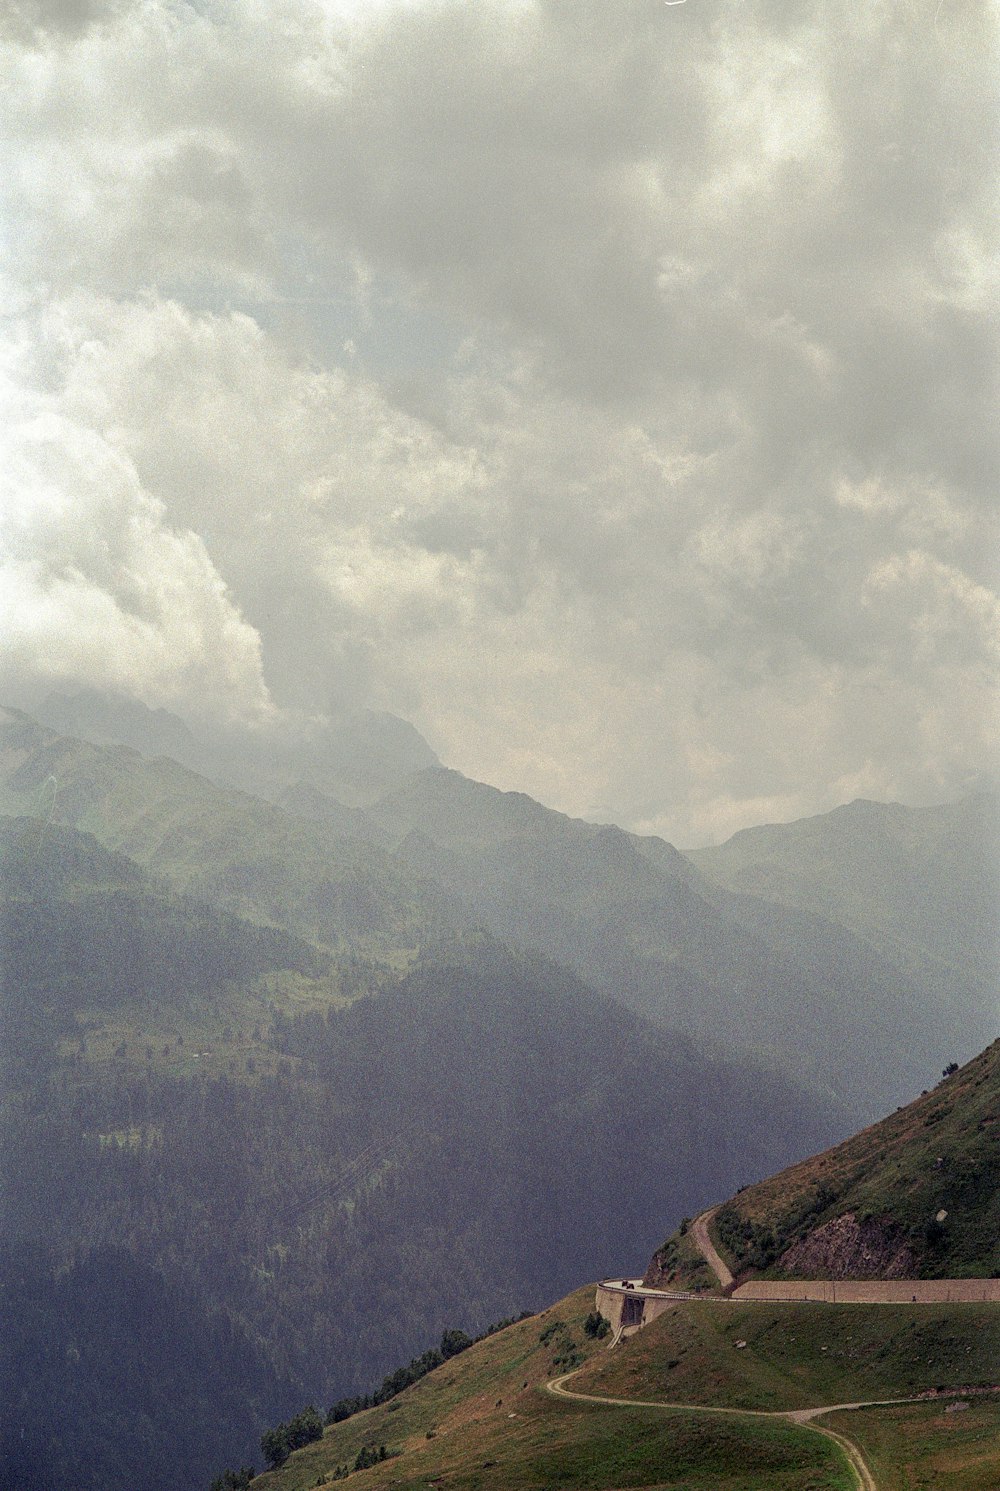 a road winding through a lush green hillside under a cloudy sky